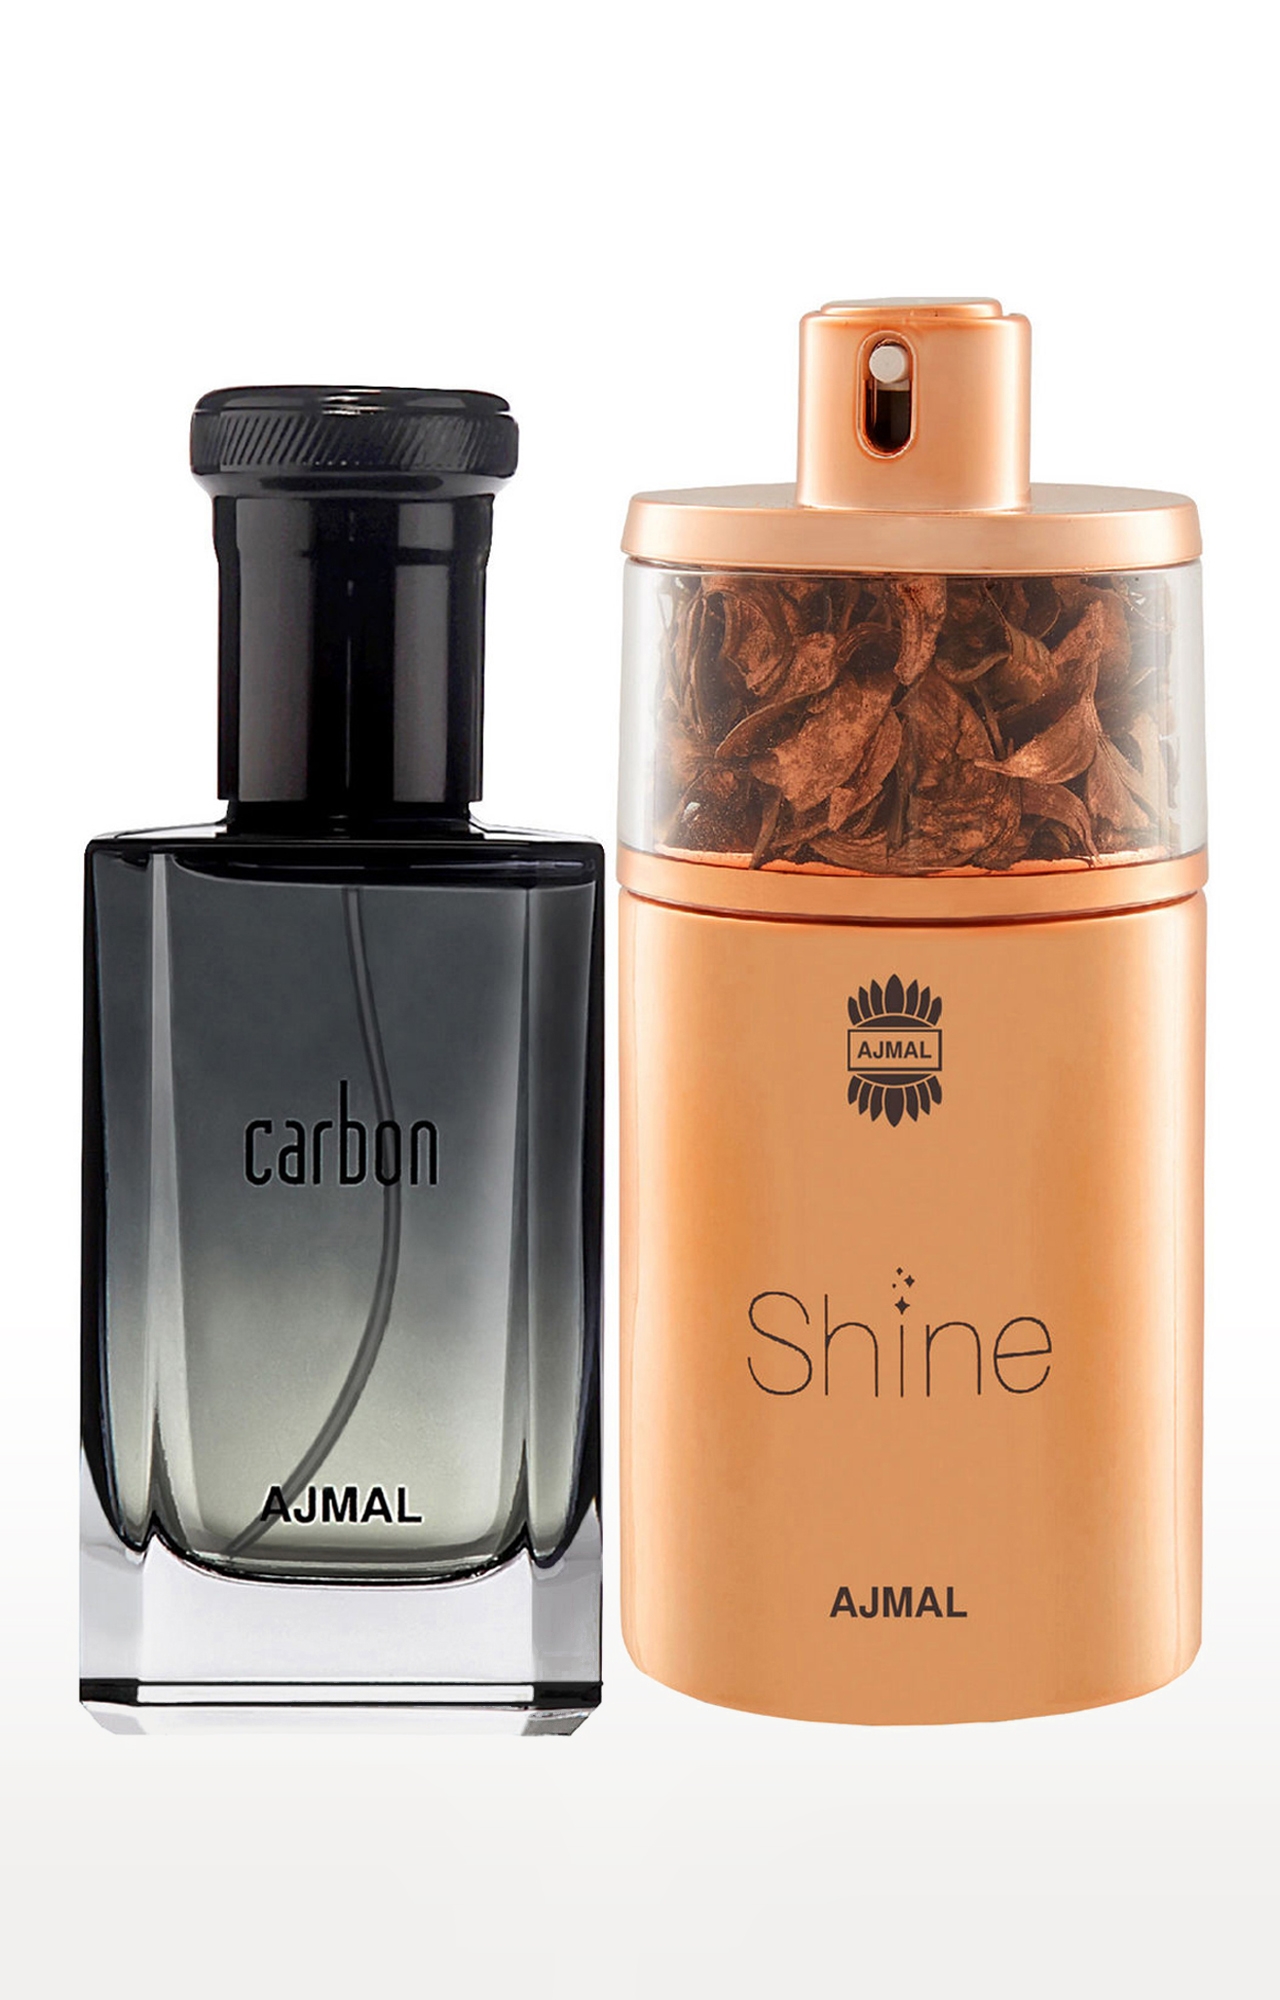 Ajmal Carbon EDP Perfume 100ml for Men and Shine EDP Perfume 75ml for Women